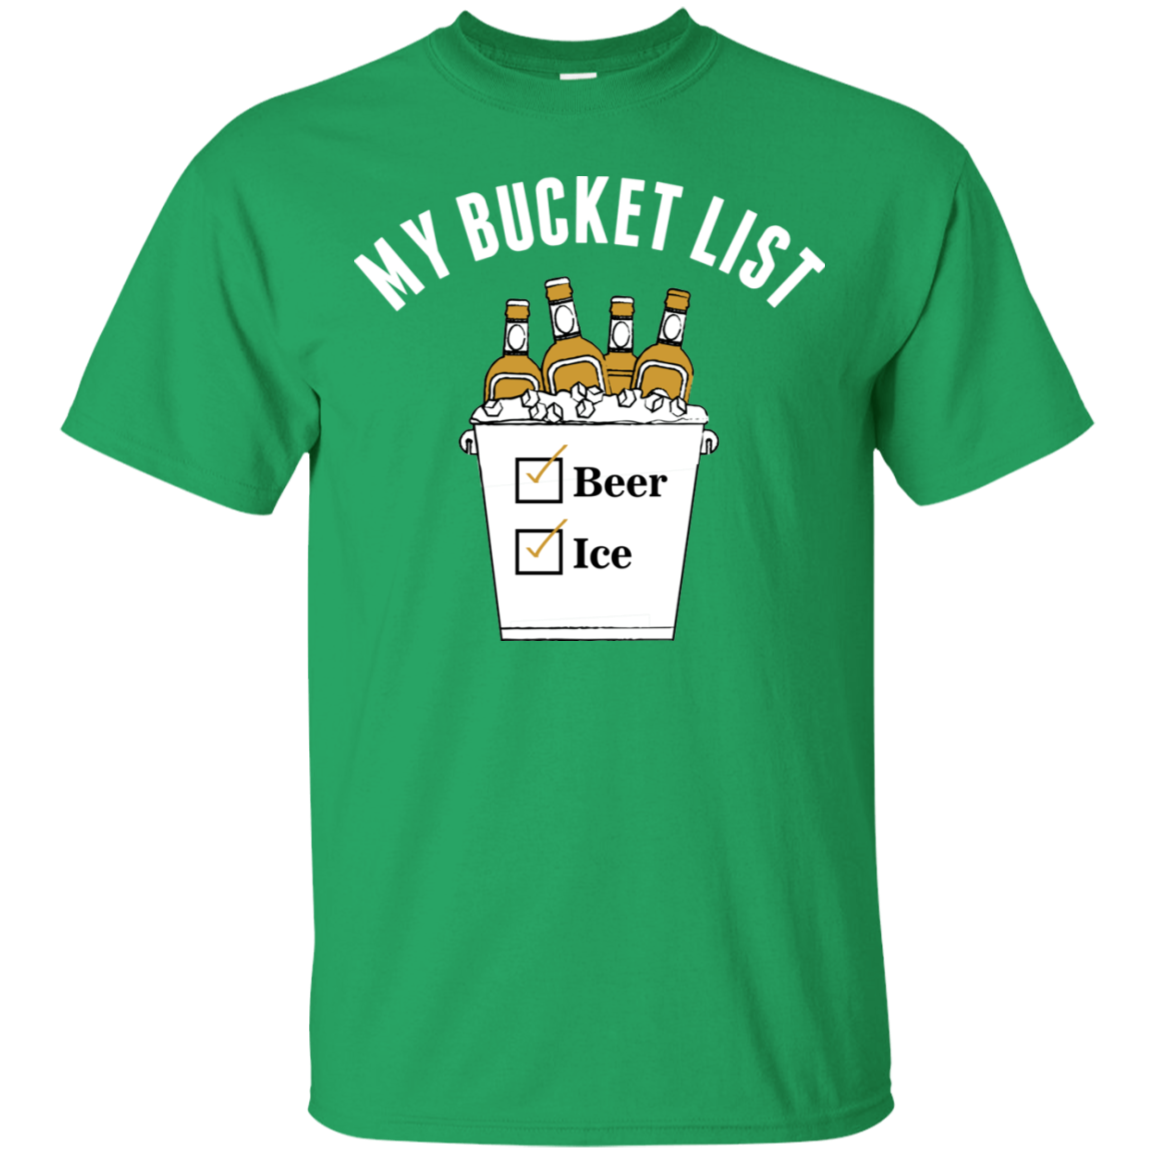 My Bucket List v3.0 T-Shirt Apparel - The Beer Lodge